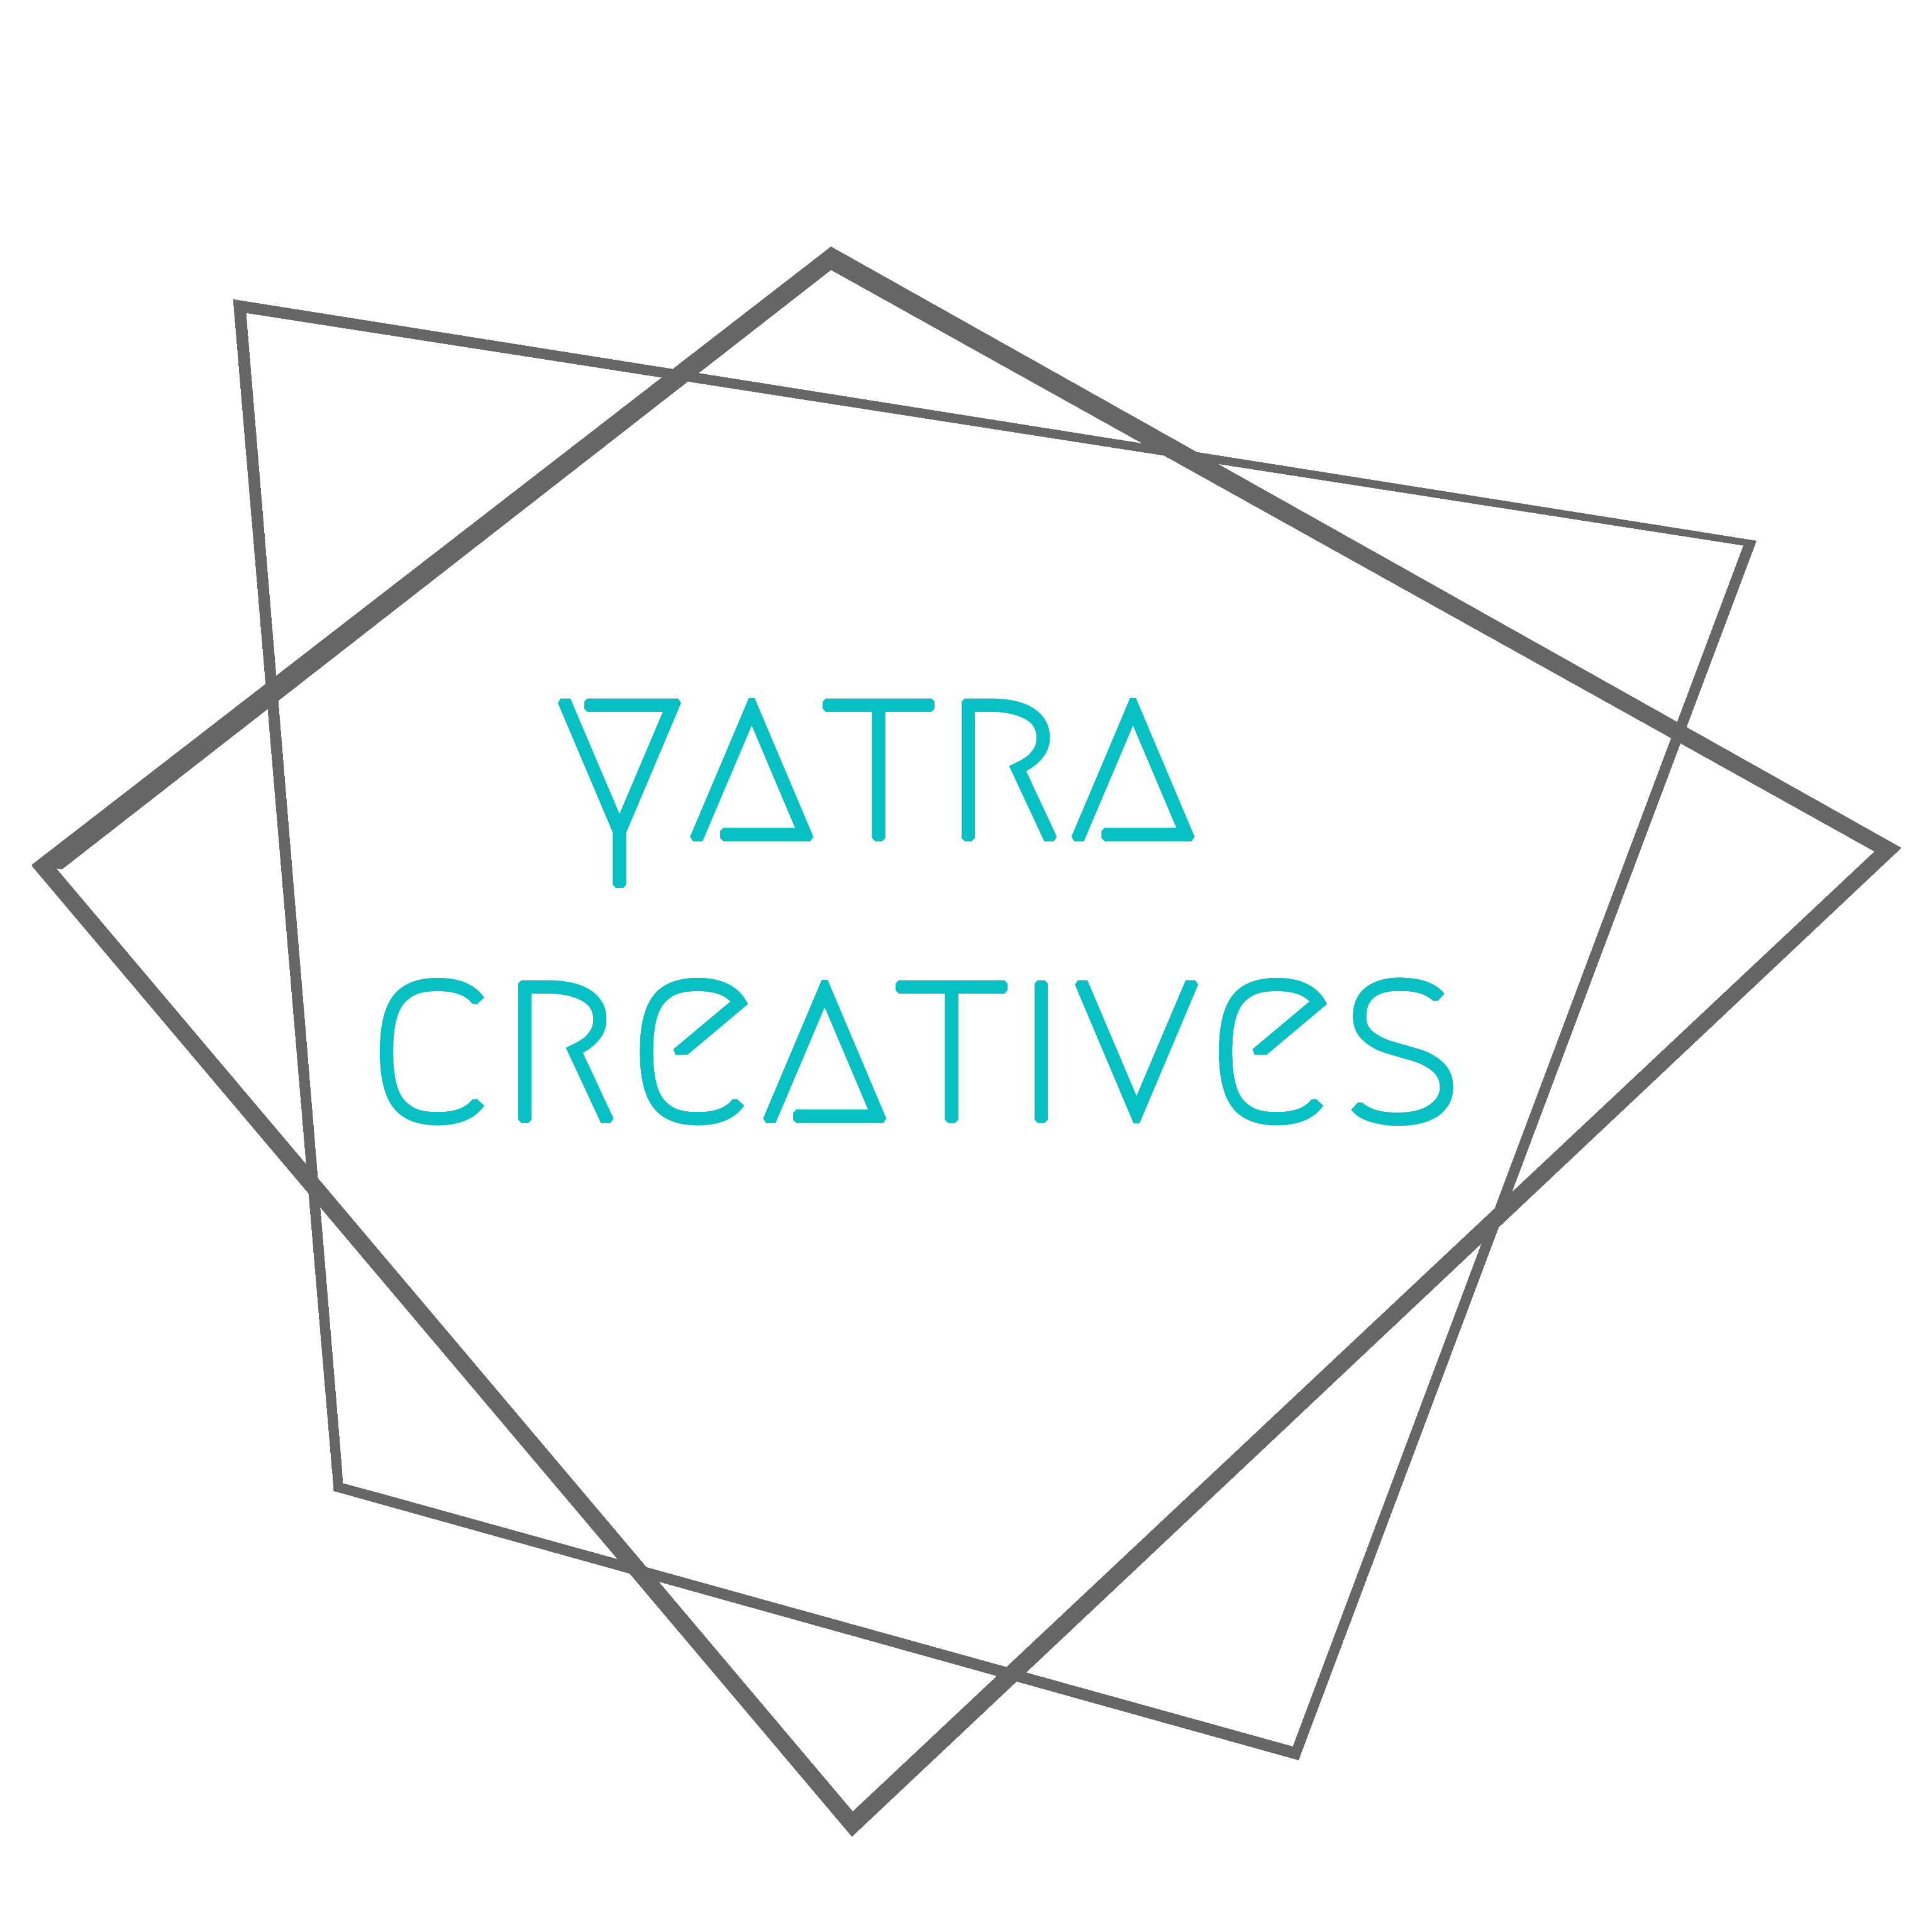 Yatra Creatives